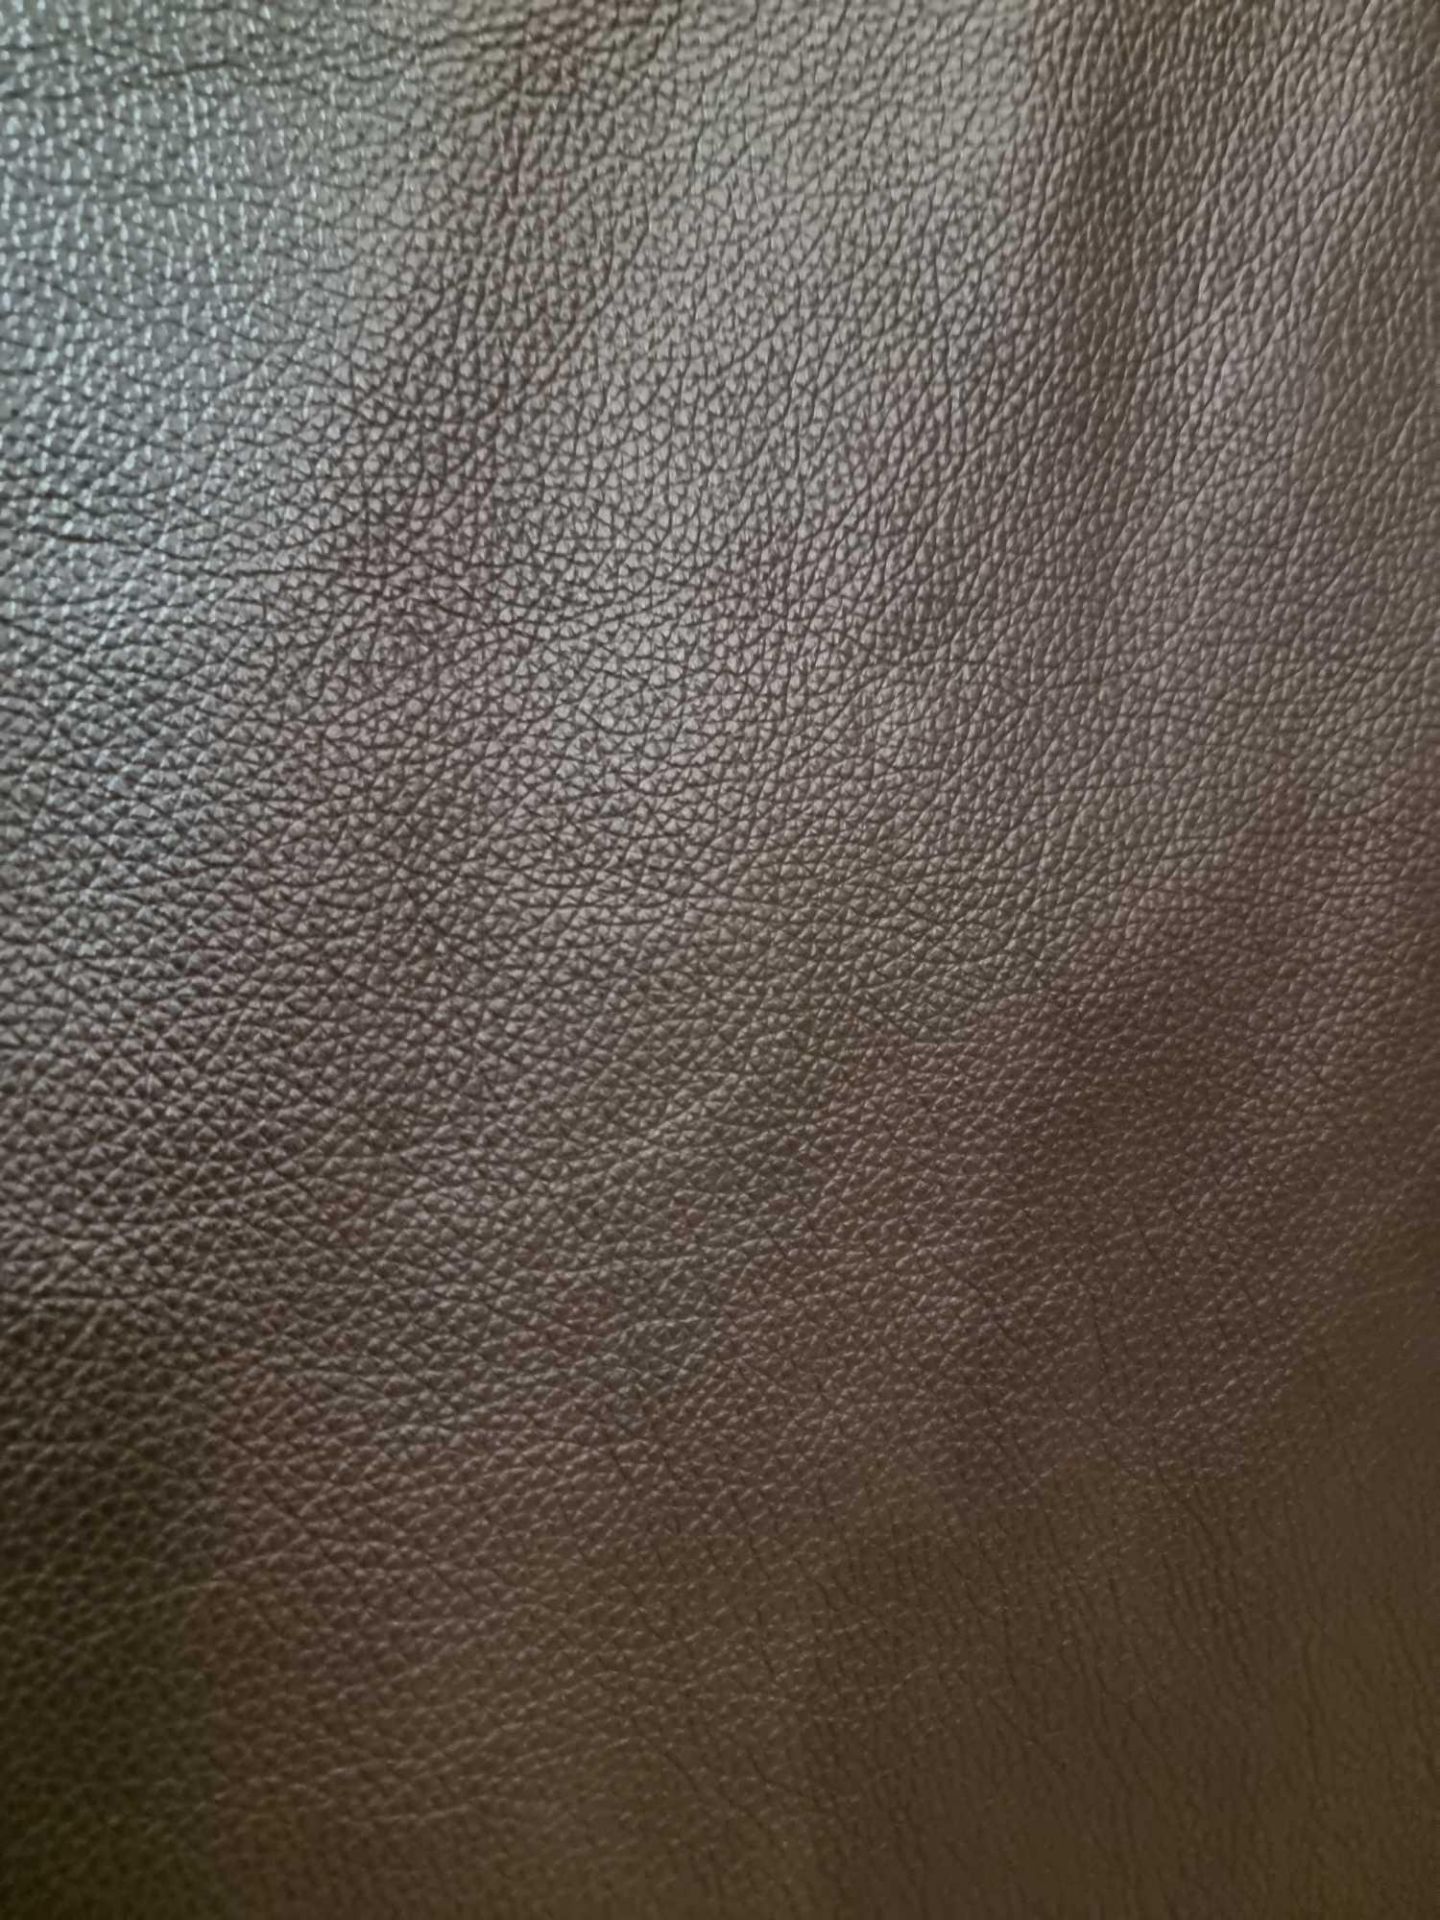 Chocolate Brown Leather Hide approximately 3.04mÂ² 1.9 x 1.6cm - Bild 2 aus 2